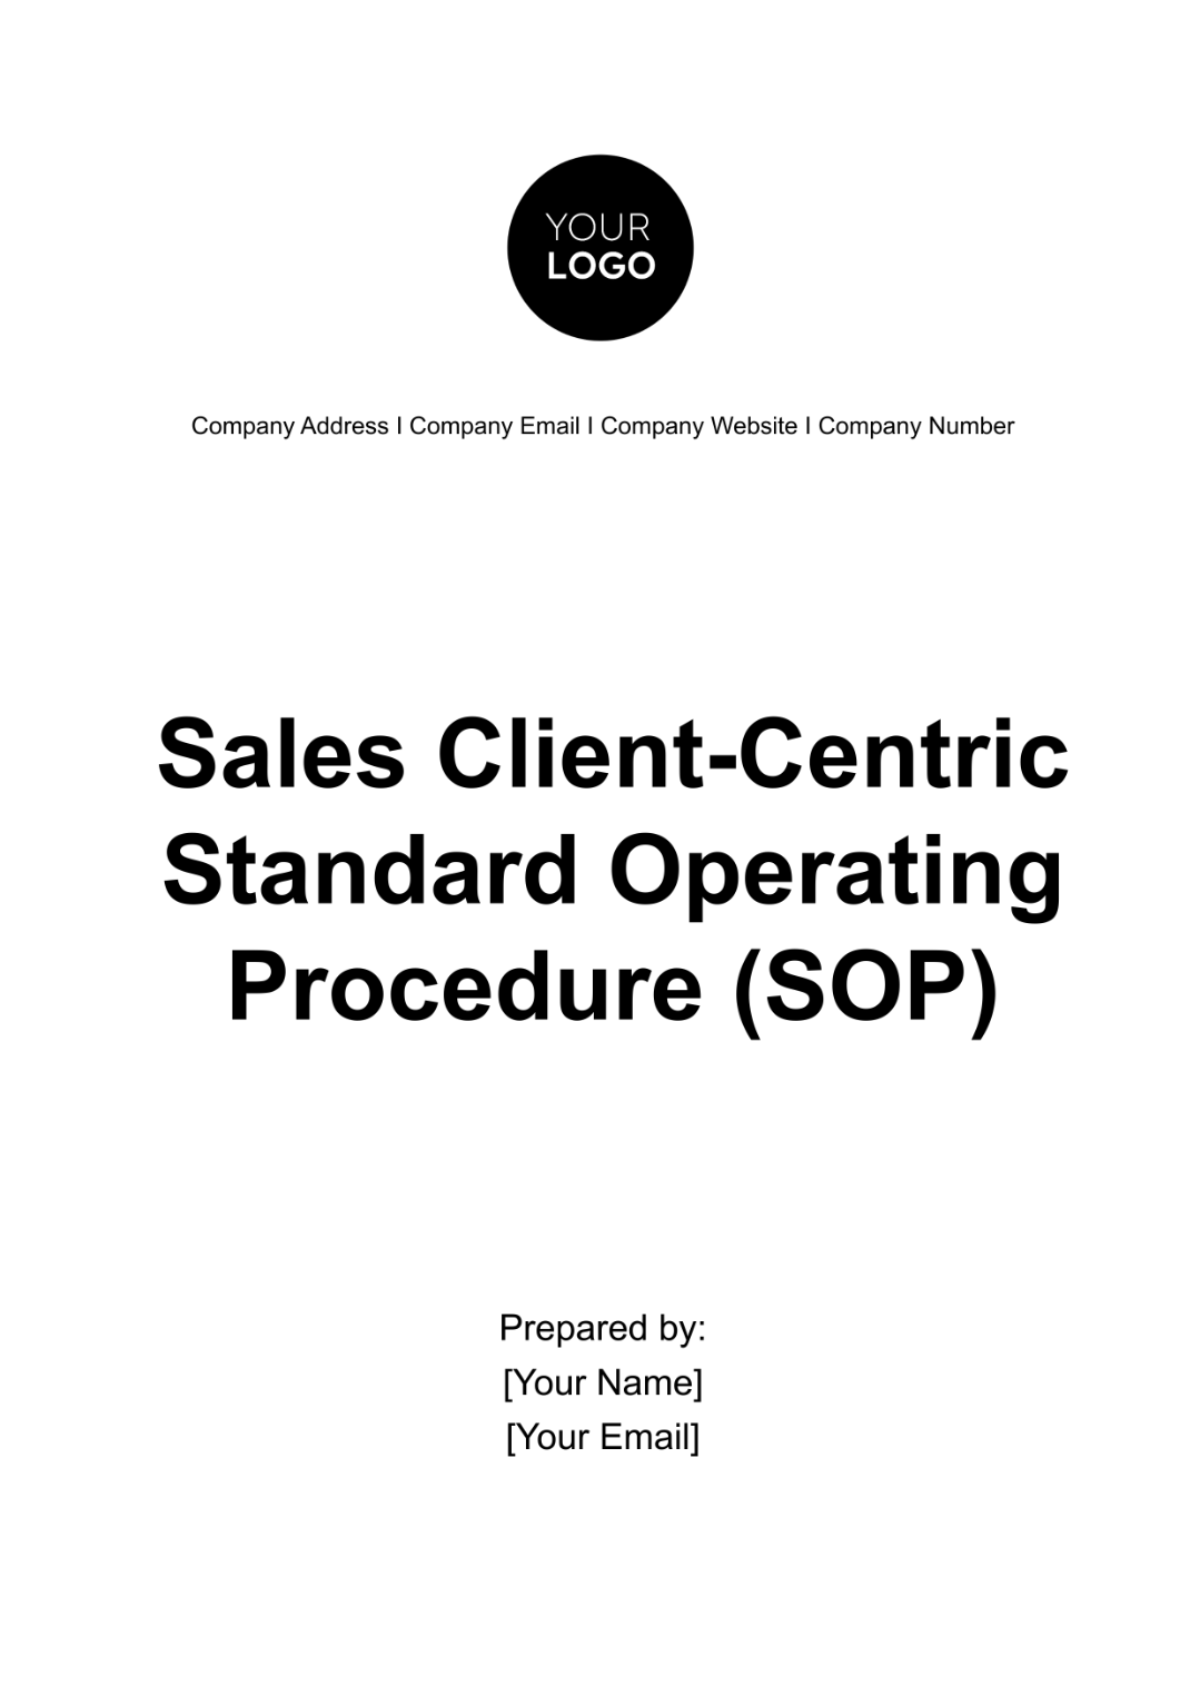 Sales Client-Centric Standard Operating Procedure (SOP) Template